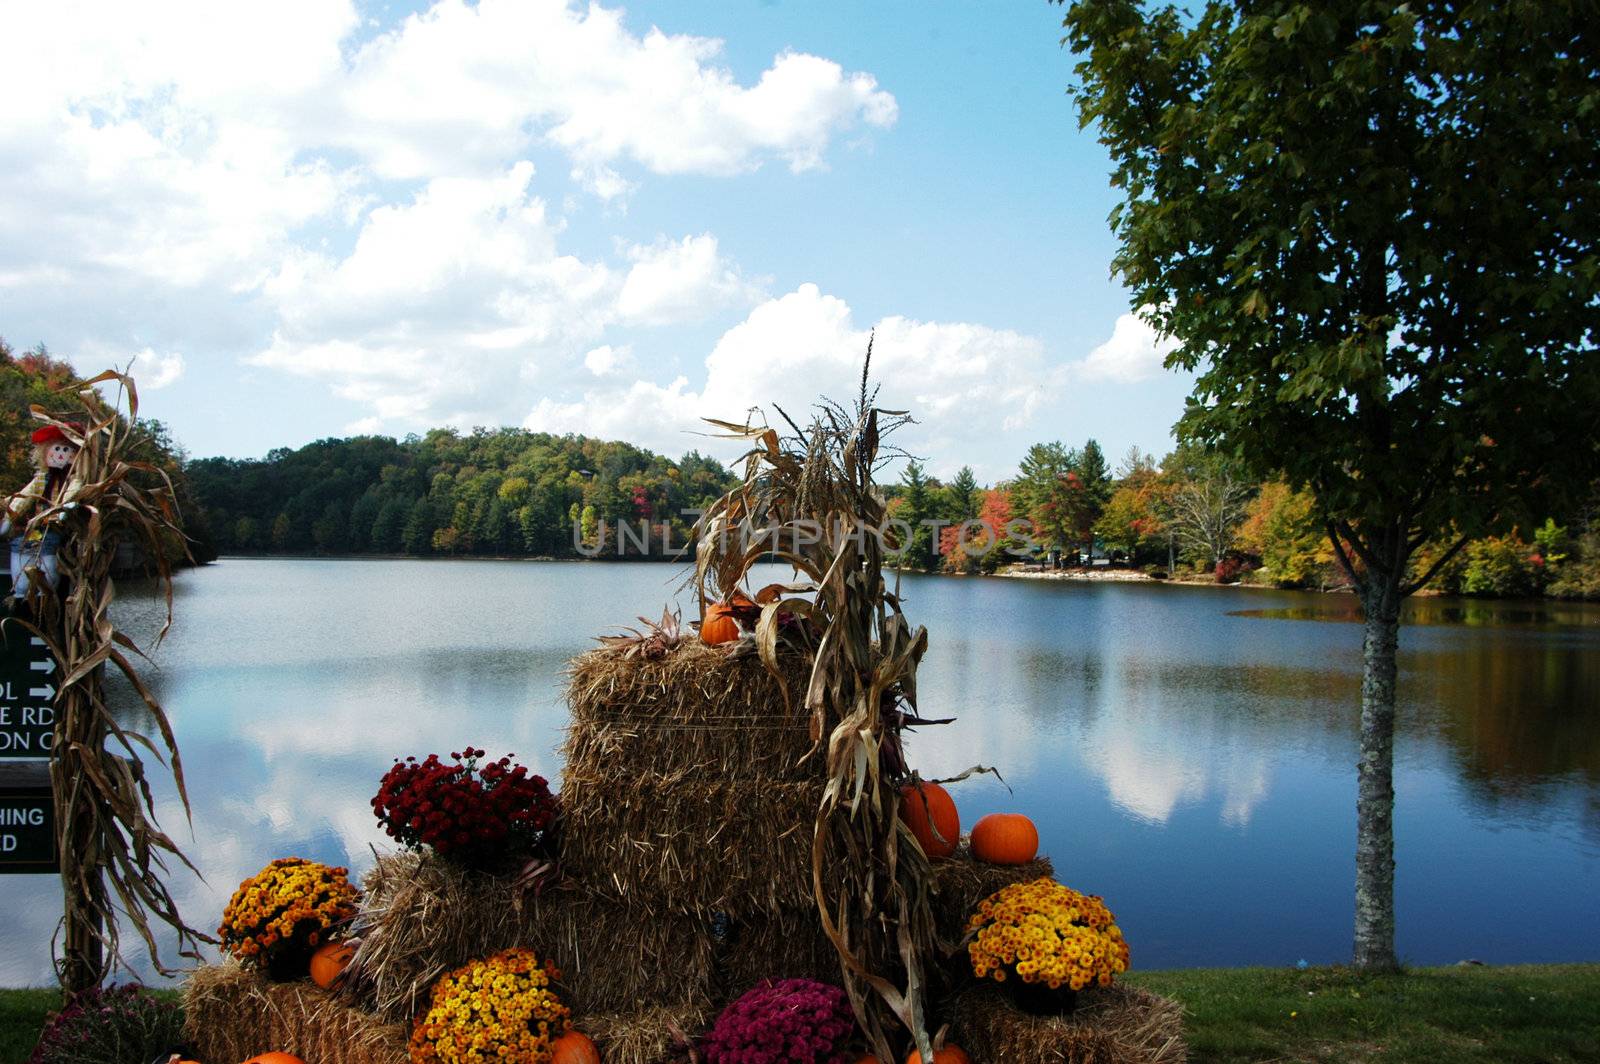 A fall scene along a lake in rural North Carolina